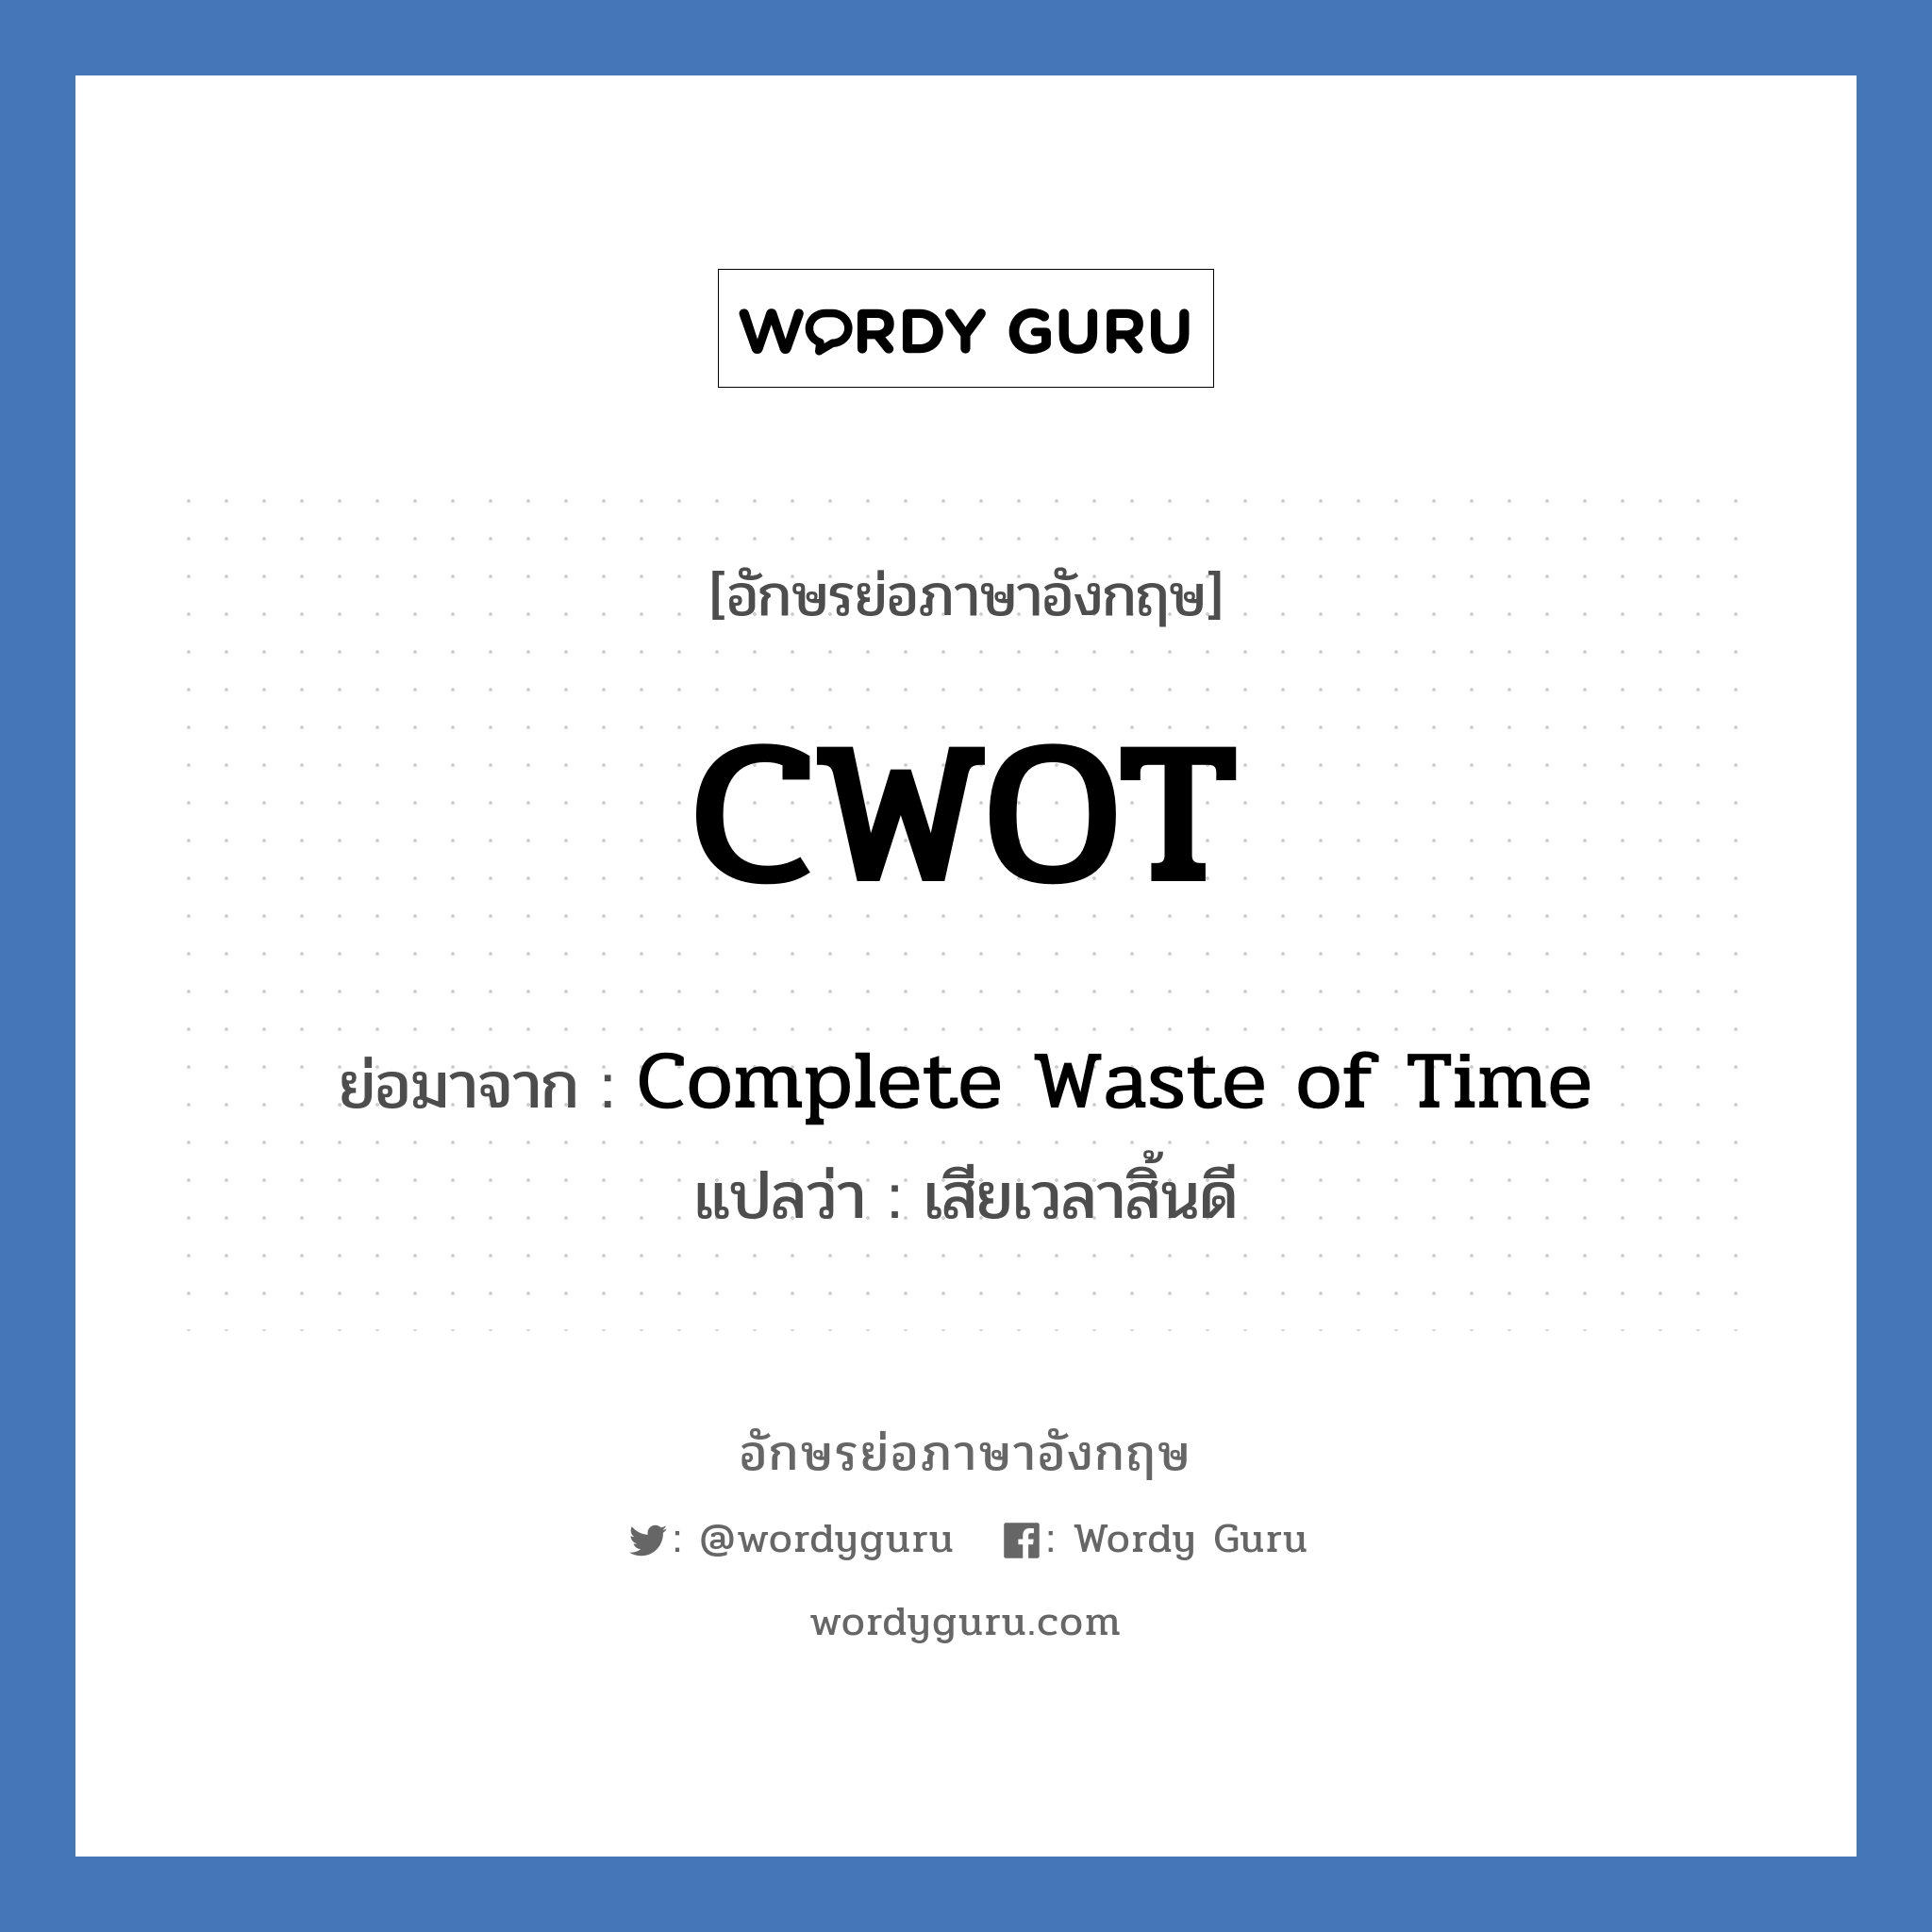 Complete Waste of Time คำย่อคือ? แปลว่า?, อักษรย่อภาษาอังกฤษ Complete Waste of Time ย่อมาจาก CWOT แปลว่า เสียเวลาสิ้นดี